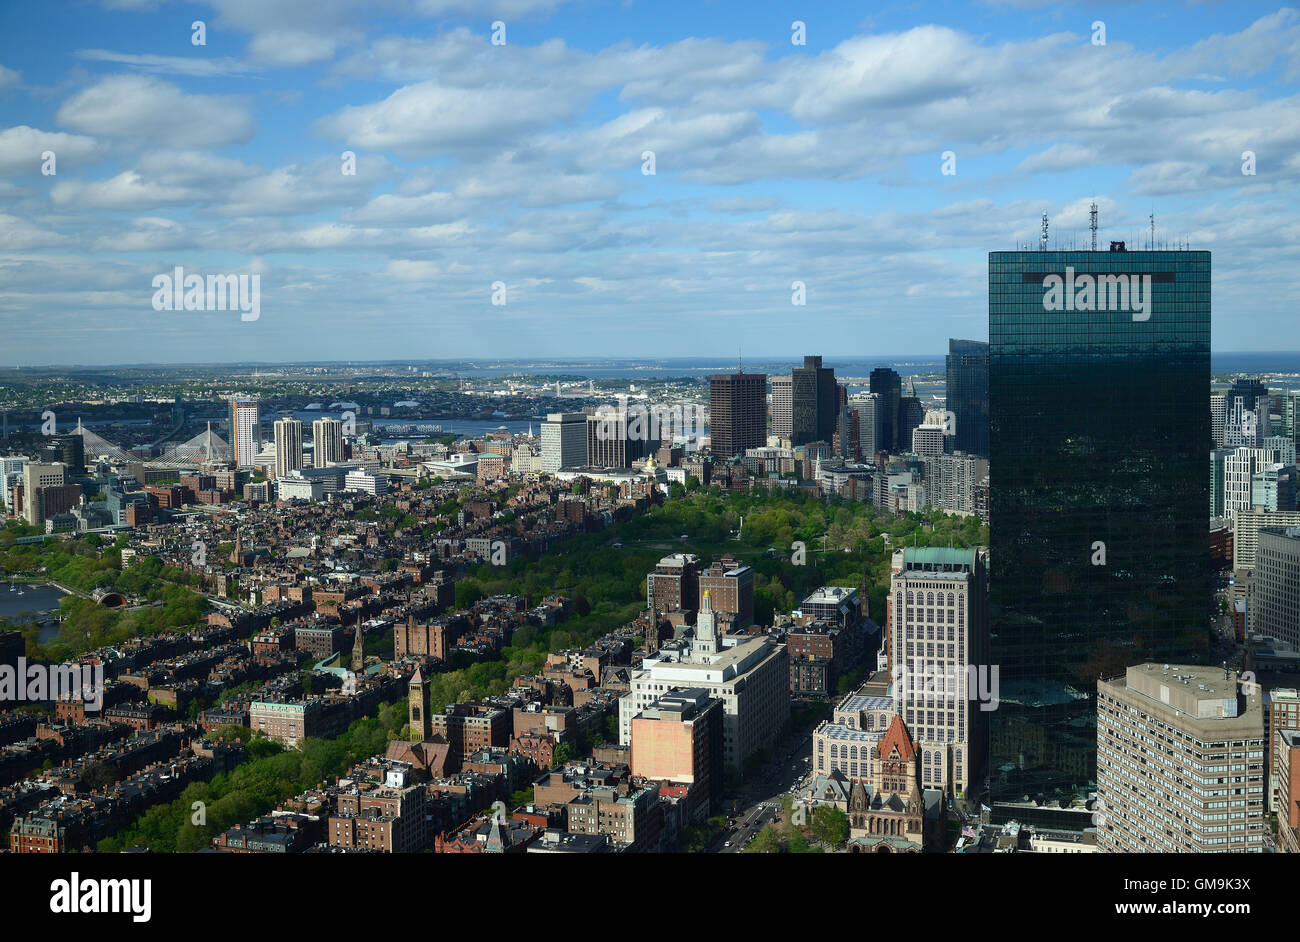 Massachusetts, Boston, Urban scene with office buildings Stock Photo